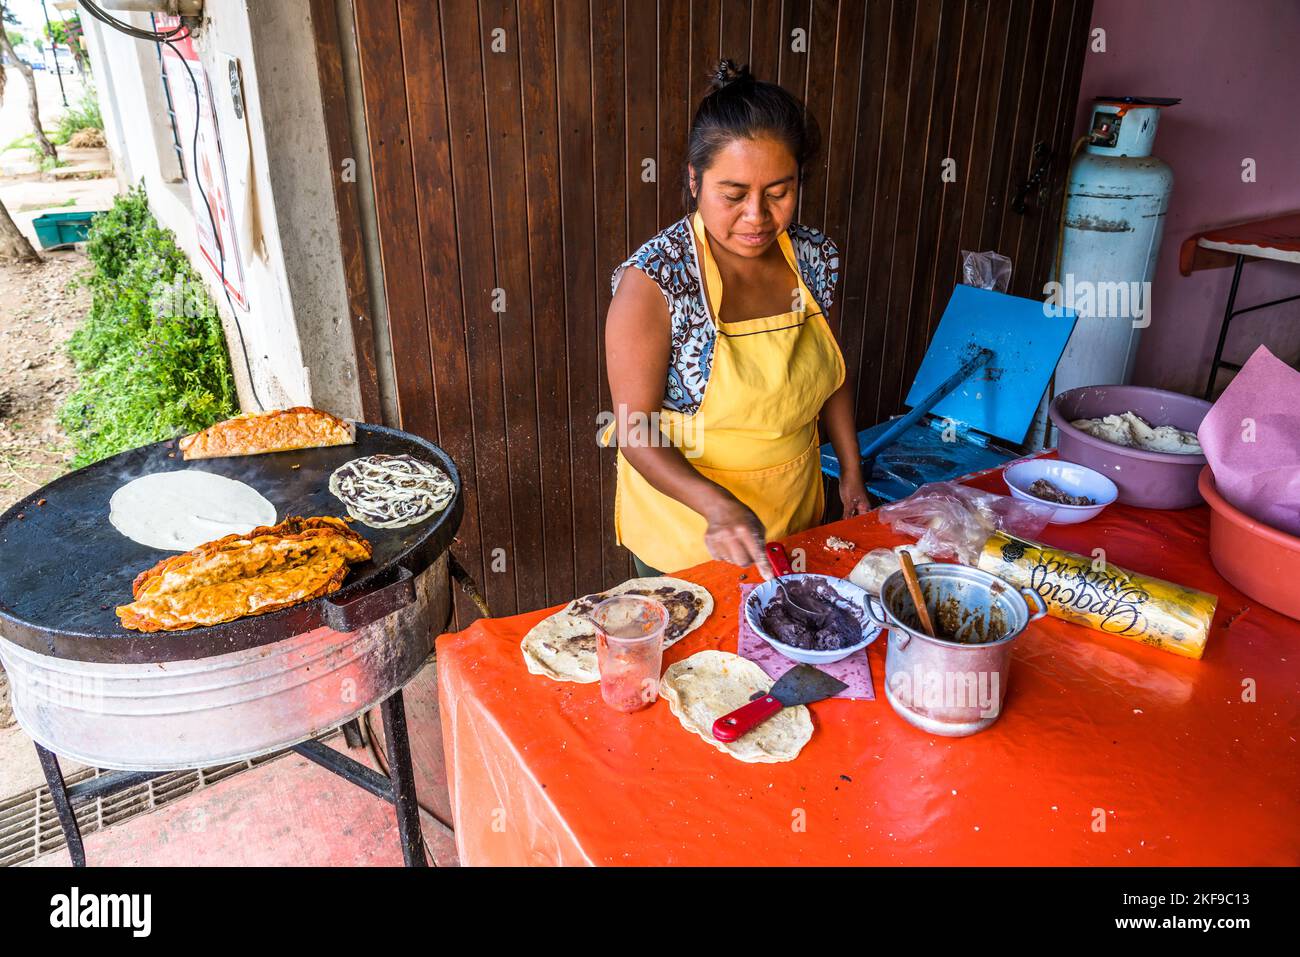 https://c8.alamy.com/comp/2KF9C13/an-indigenous-zapotec-woman-cooks-quesadillas-on-comal-in-a-sidewalk-restaurant-in-san-antonino-castillo-velasco-oaxaca-mexico-2KF9C13.jpg